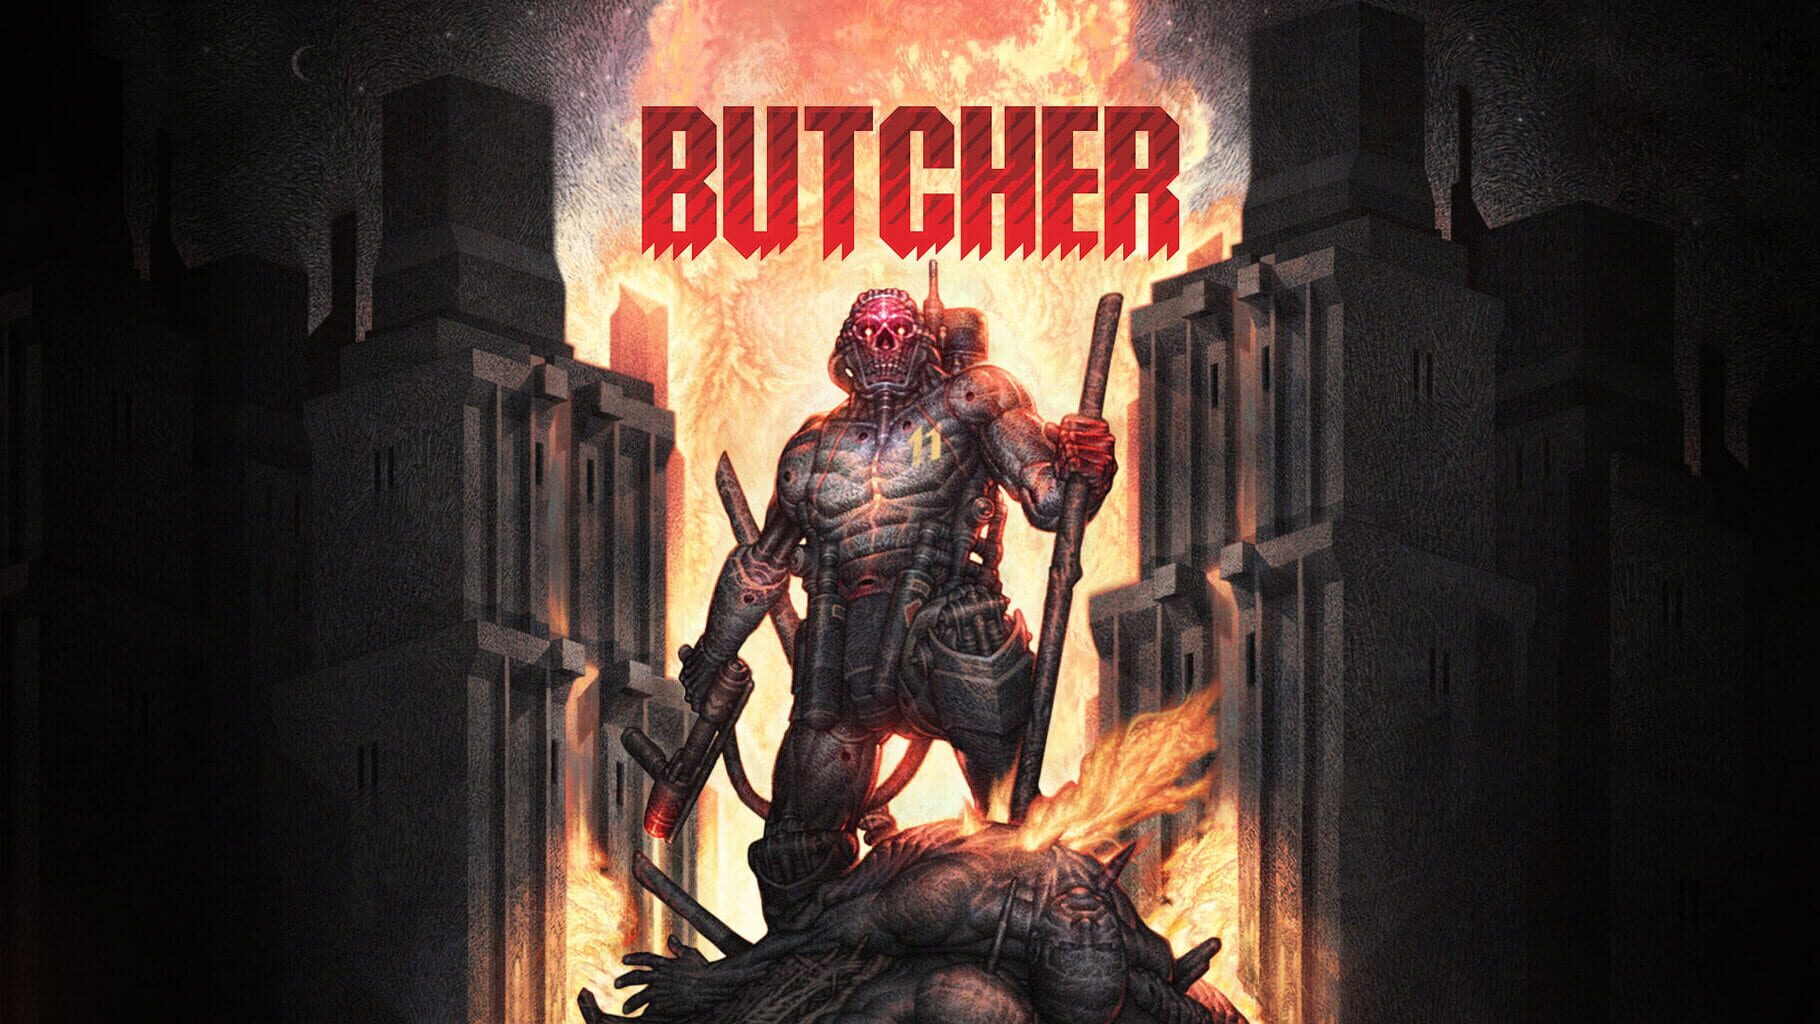 Butcher artwork